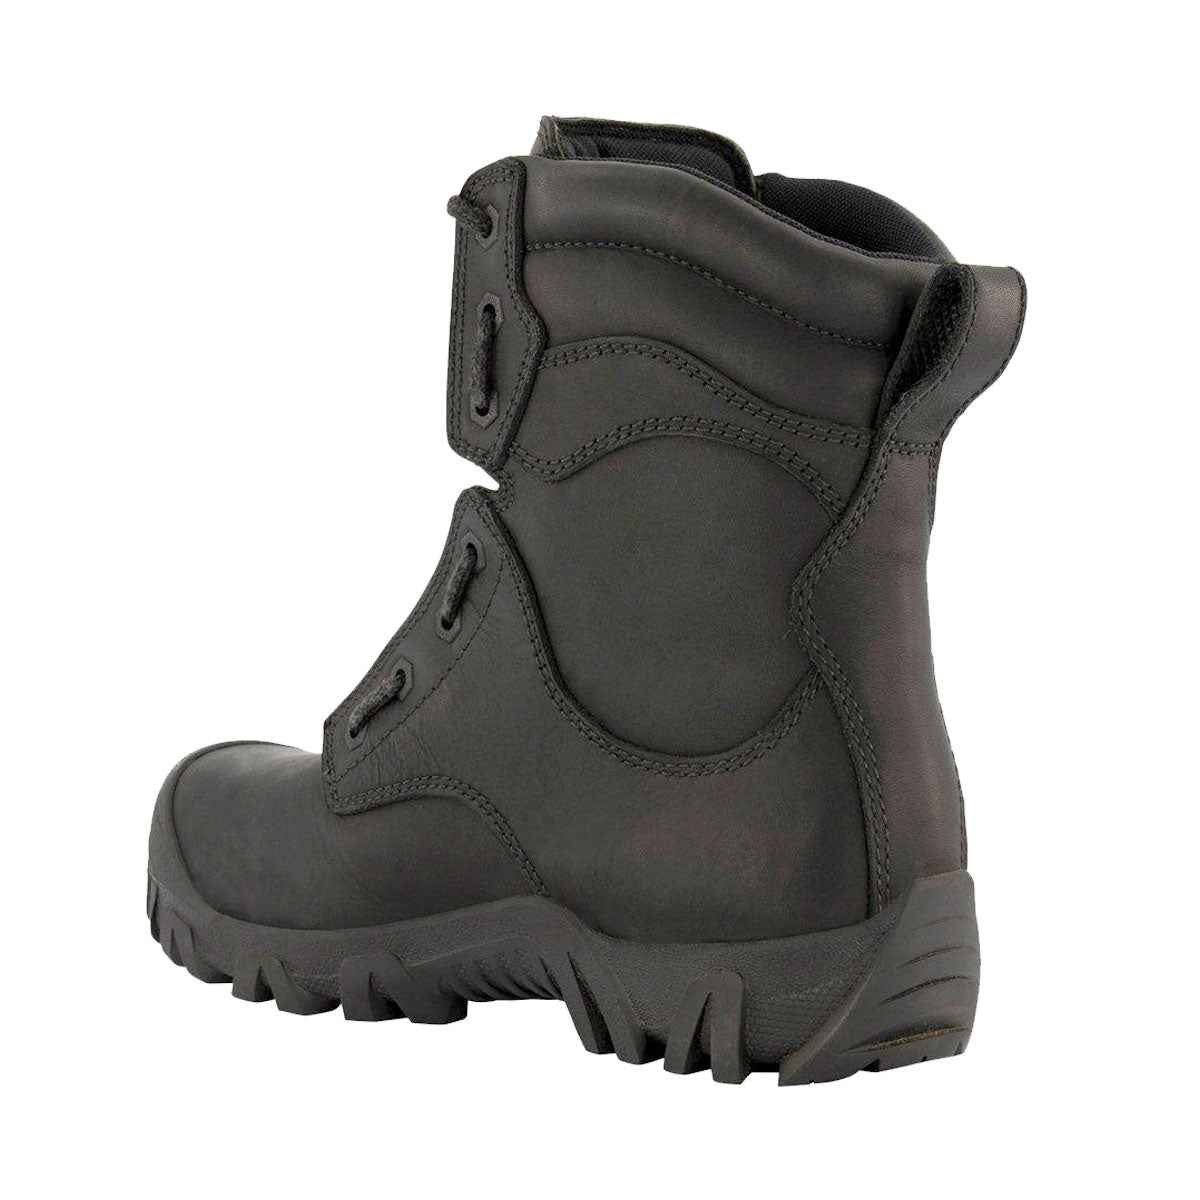 Magnum Vulcan Composite Toe and Plate Waterproof Boot with Front Zipper Footwear Magnum Footwear Tactical Gear Supplier Tactical Distributors Australia